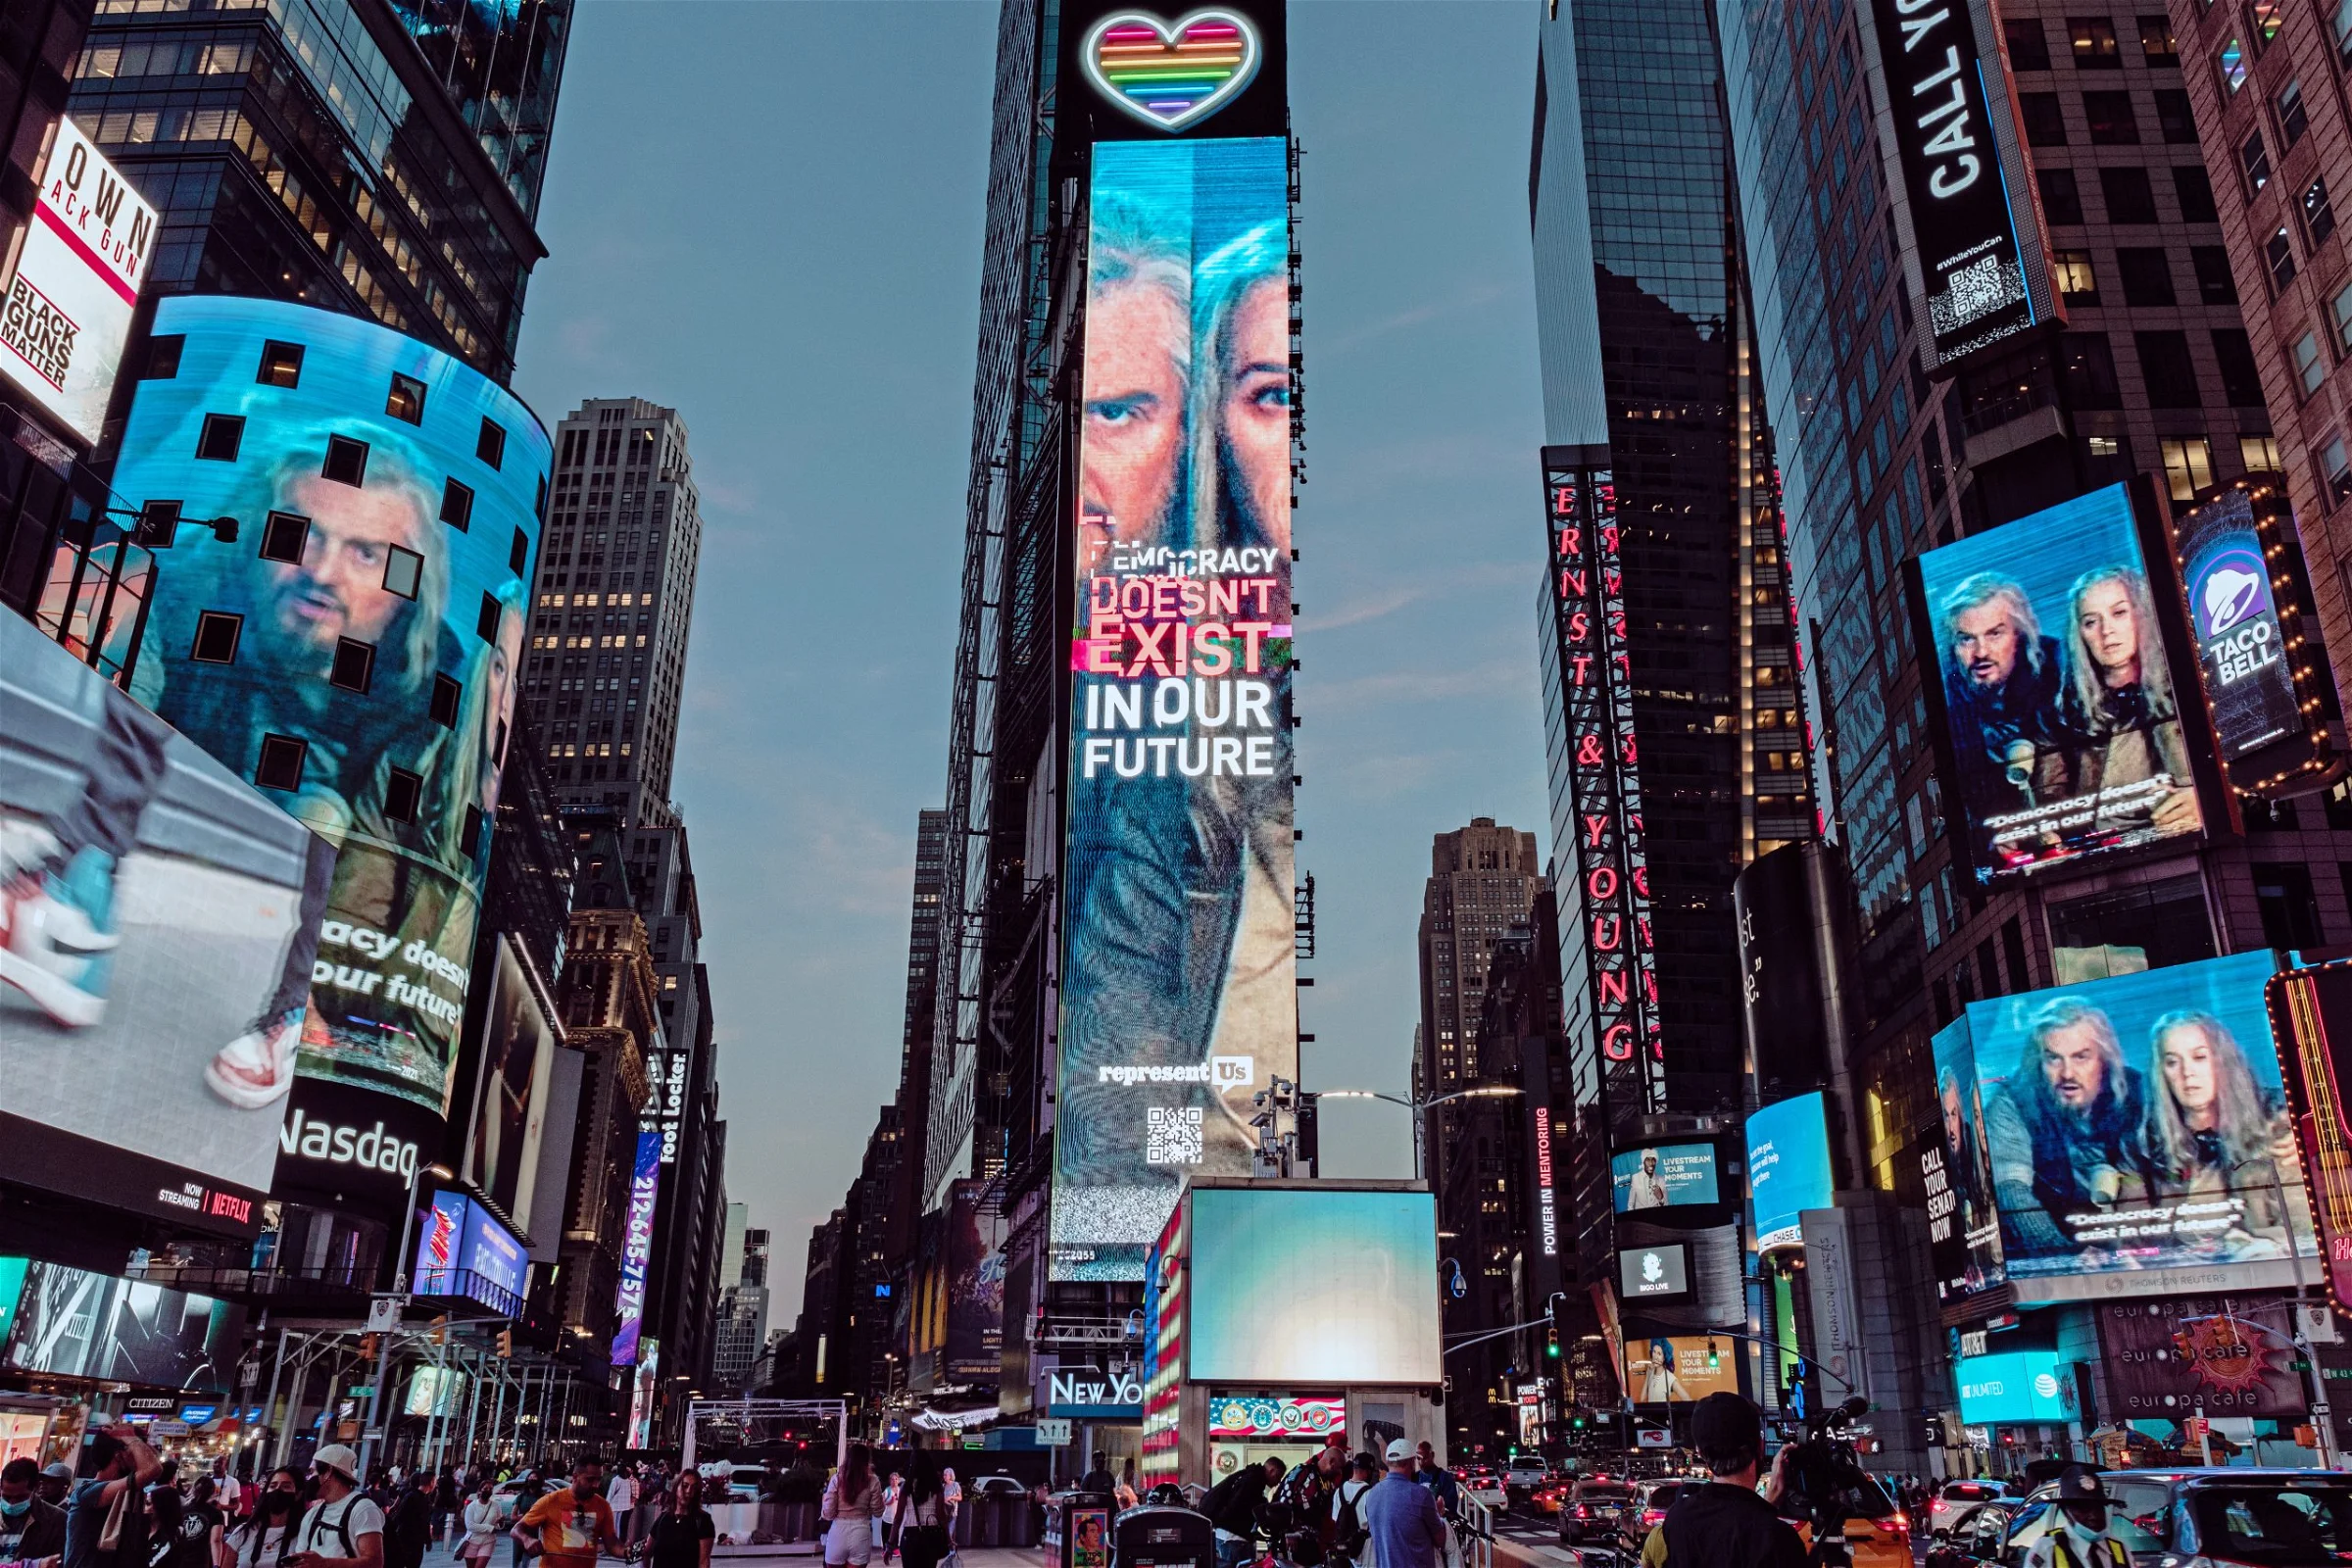 Times Square Digital Billboards RepresentUs Campaign